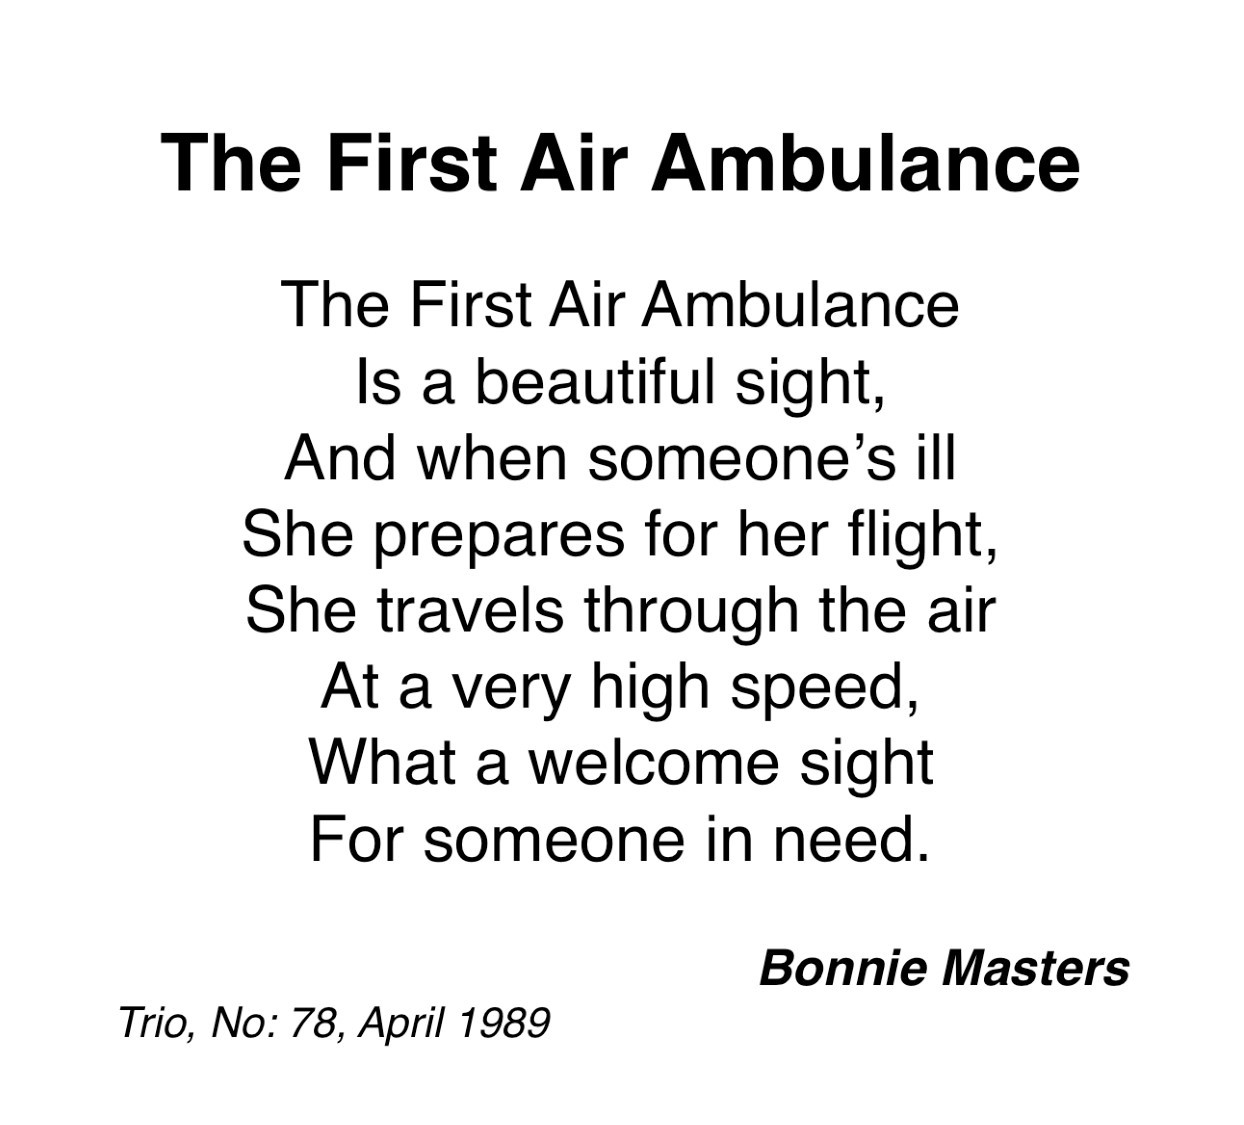 The First Air Ambulance